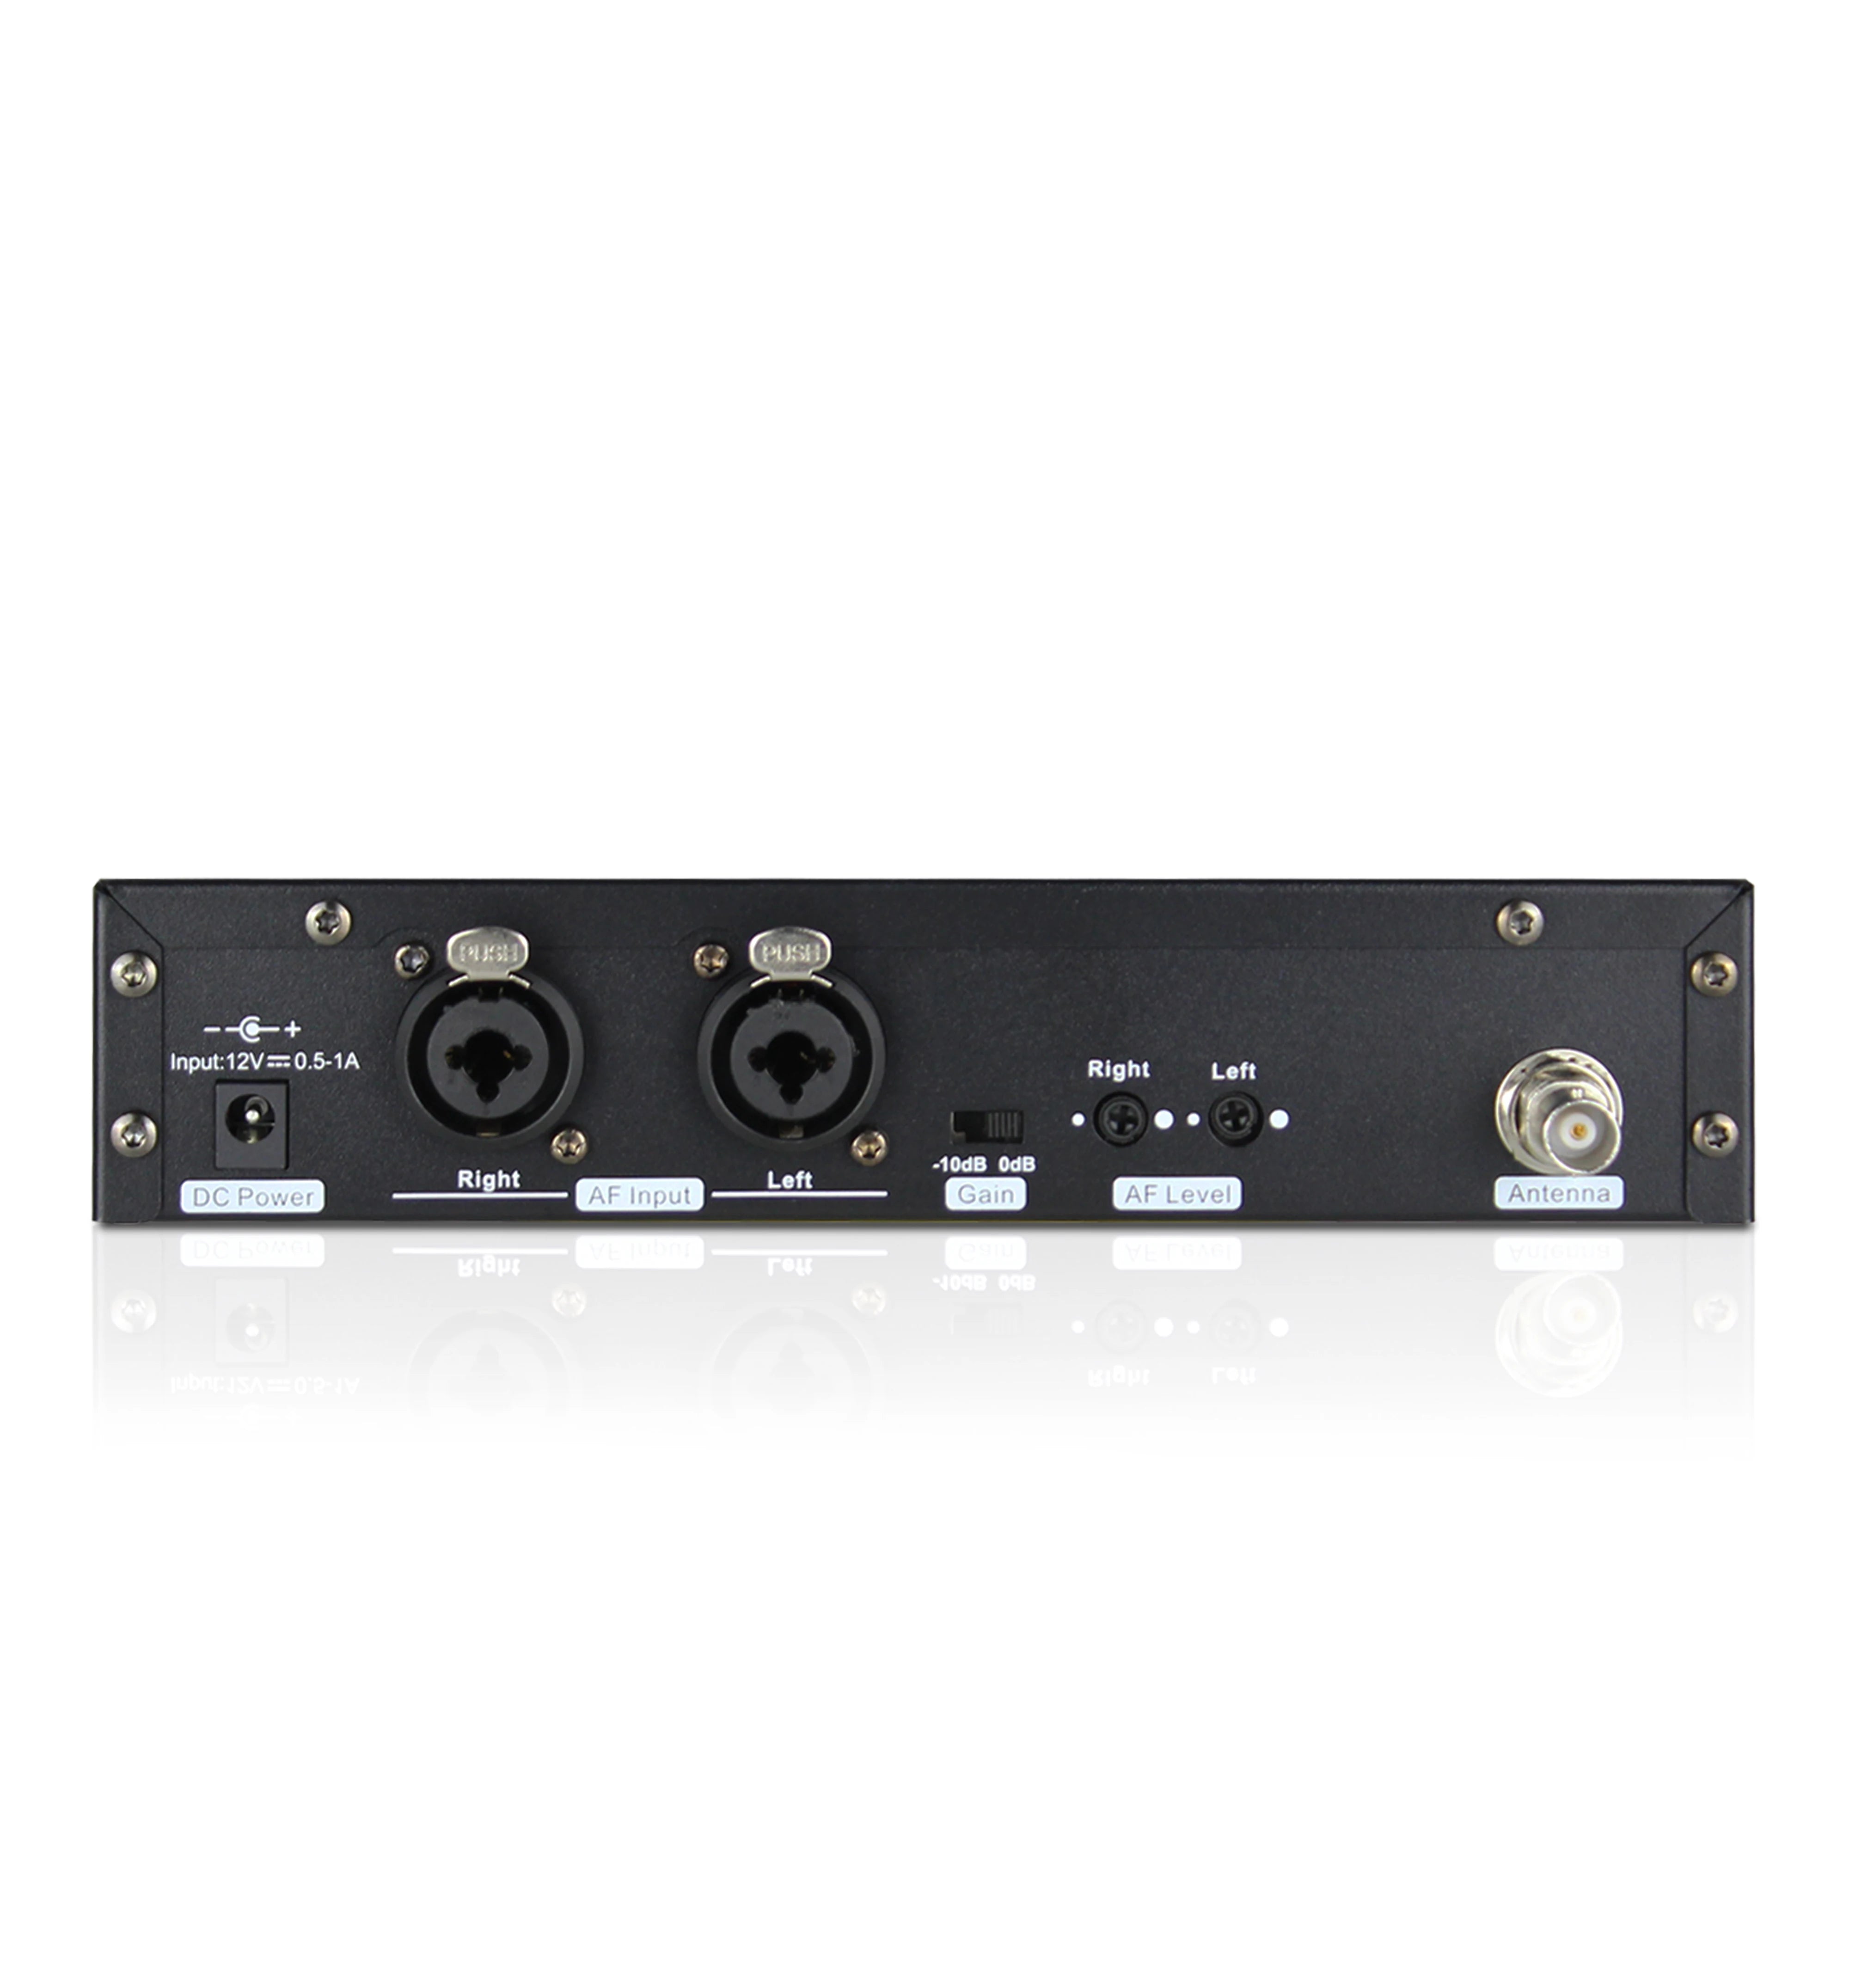 HONGUAN Stereo PSM-X400, PJsh C+ Input:12V=0.5-1A Right Loft DC Power